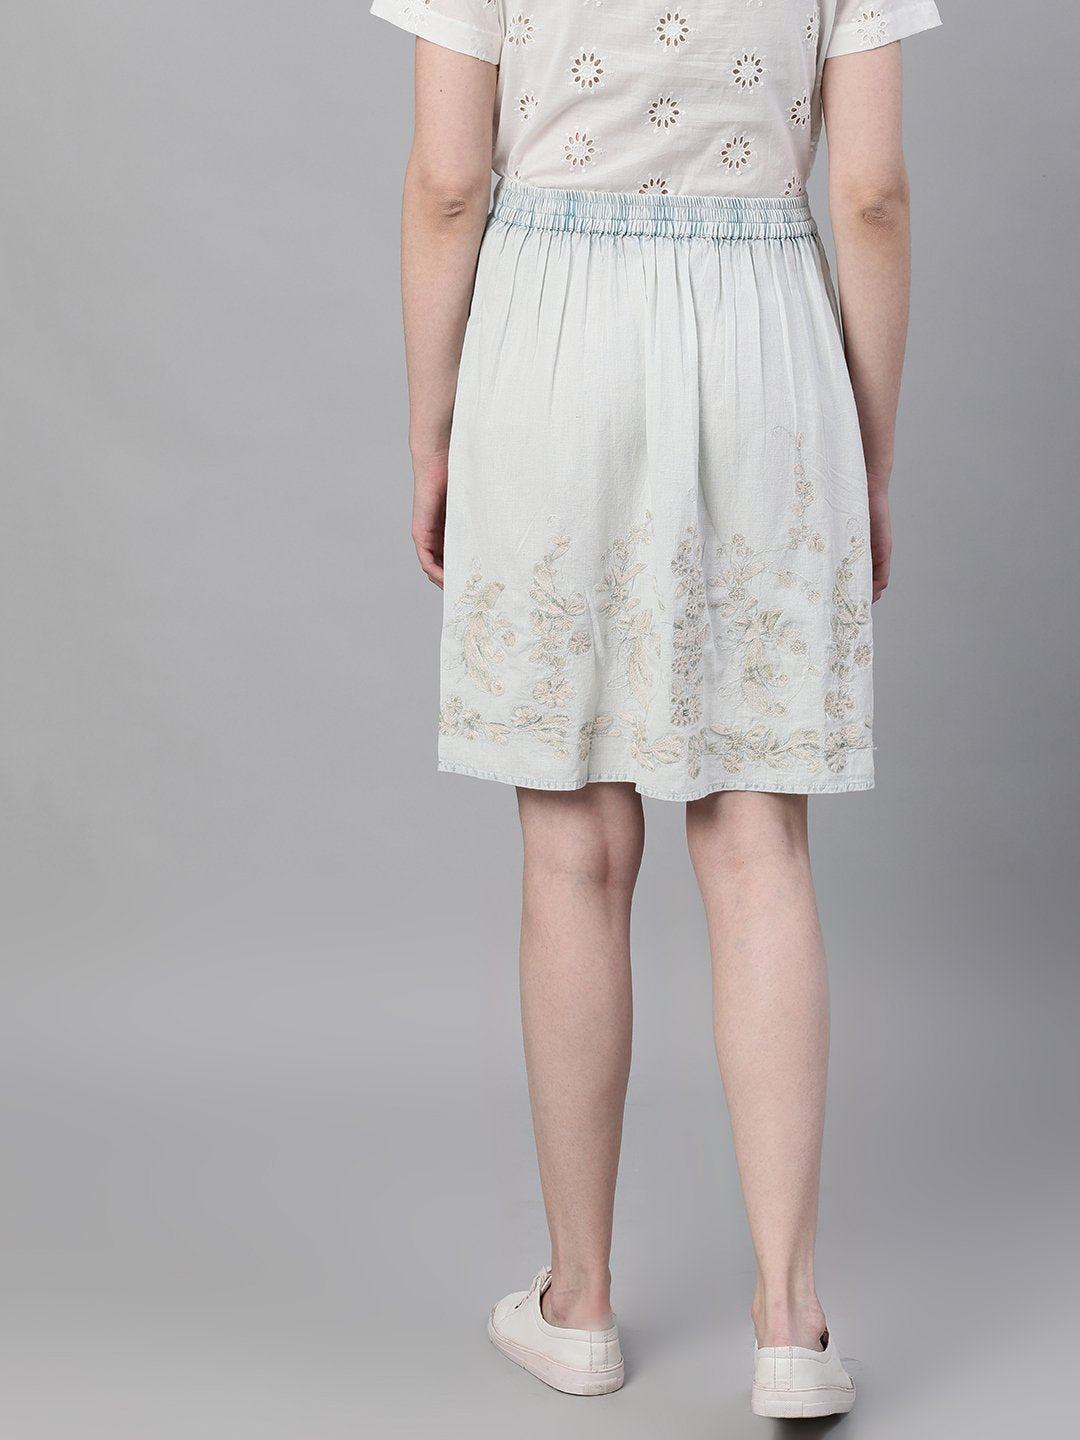 Ishin Women's Light Blue Washed Denim Embroidered A-Line Mini Skirt